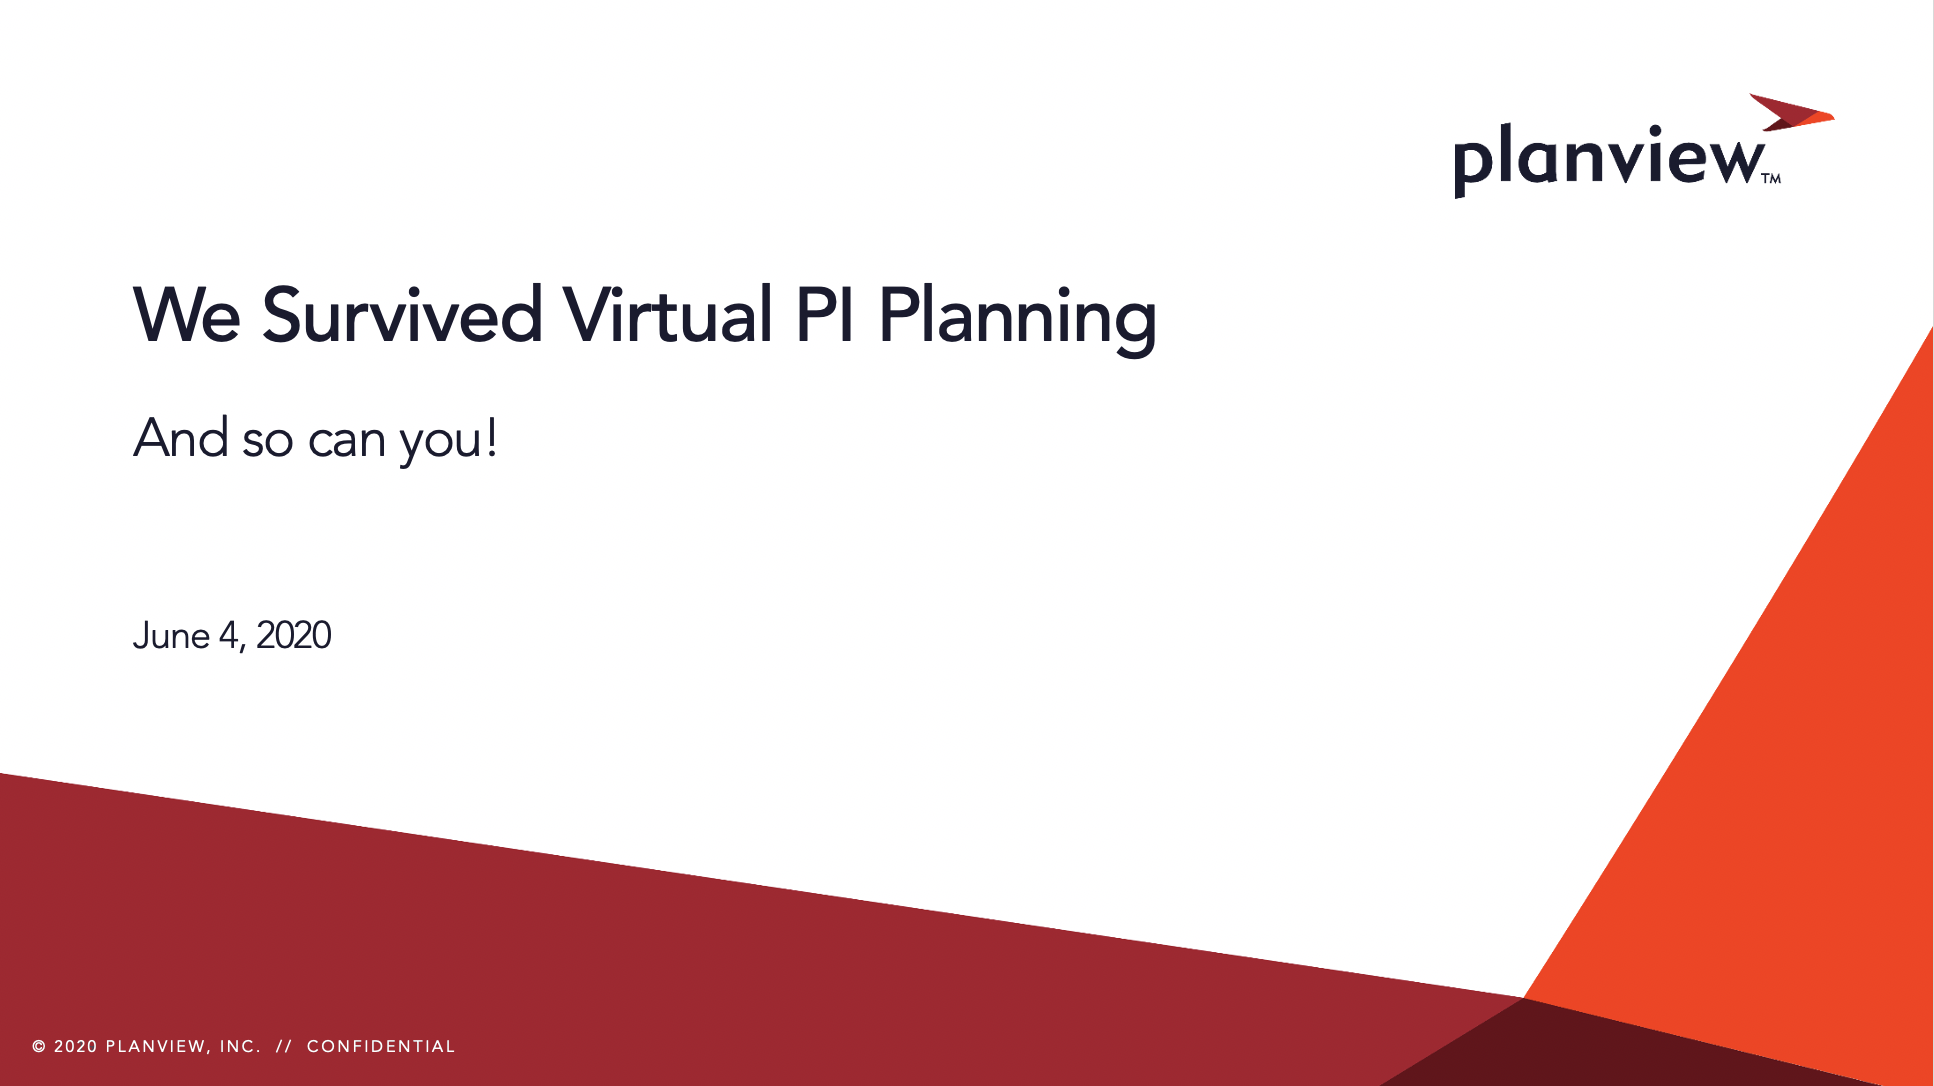 We Survived Virtual PI Planning!